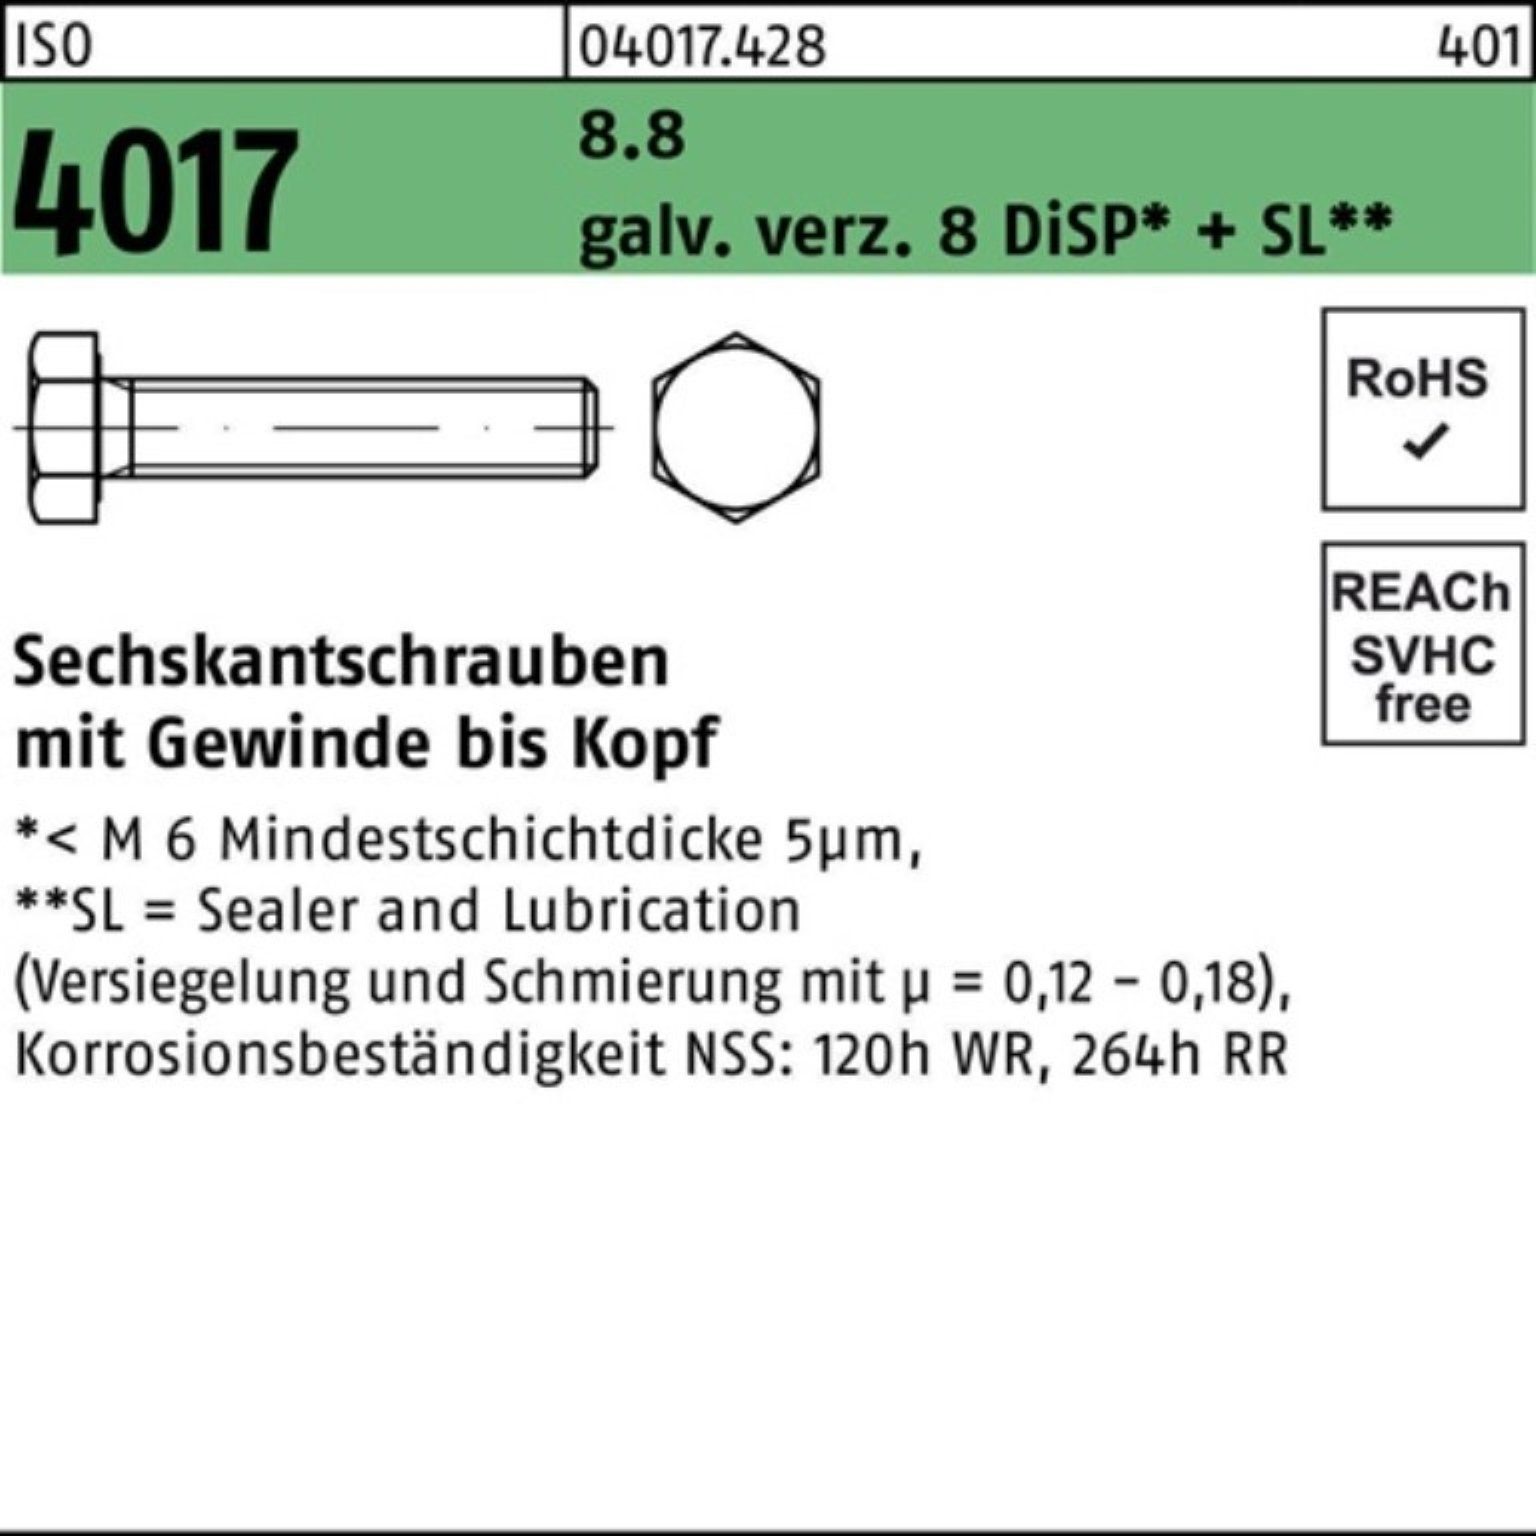 4017 Pack Bufab 120 8.8 8 ISO Sechskantschraube galv.verz. 100er Sechskantschraube VG DiS M12x